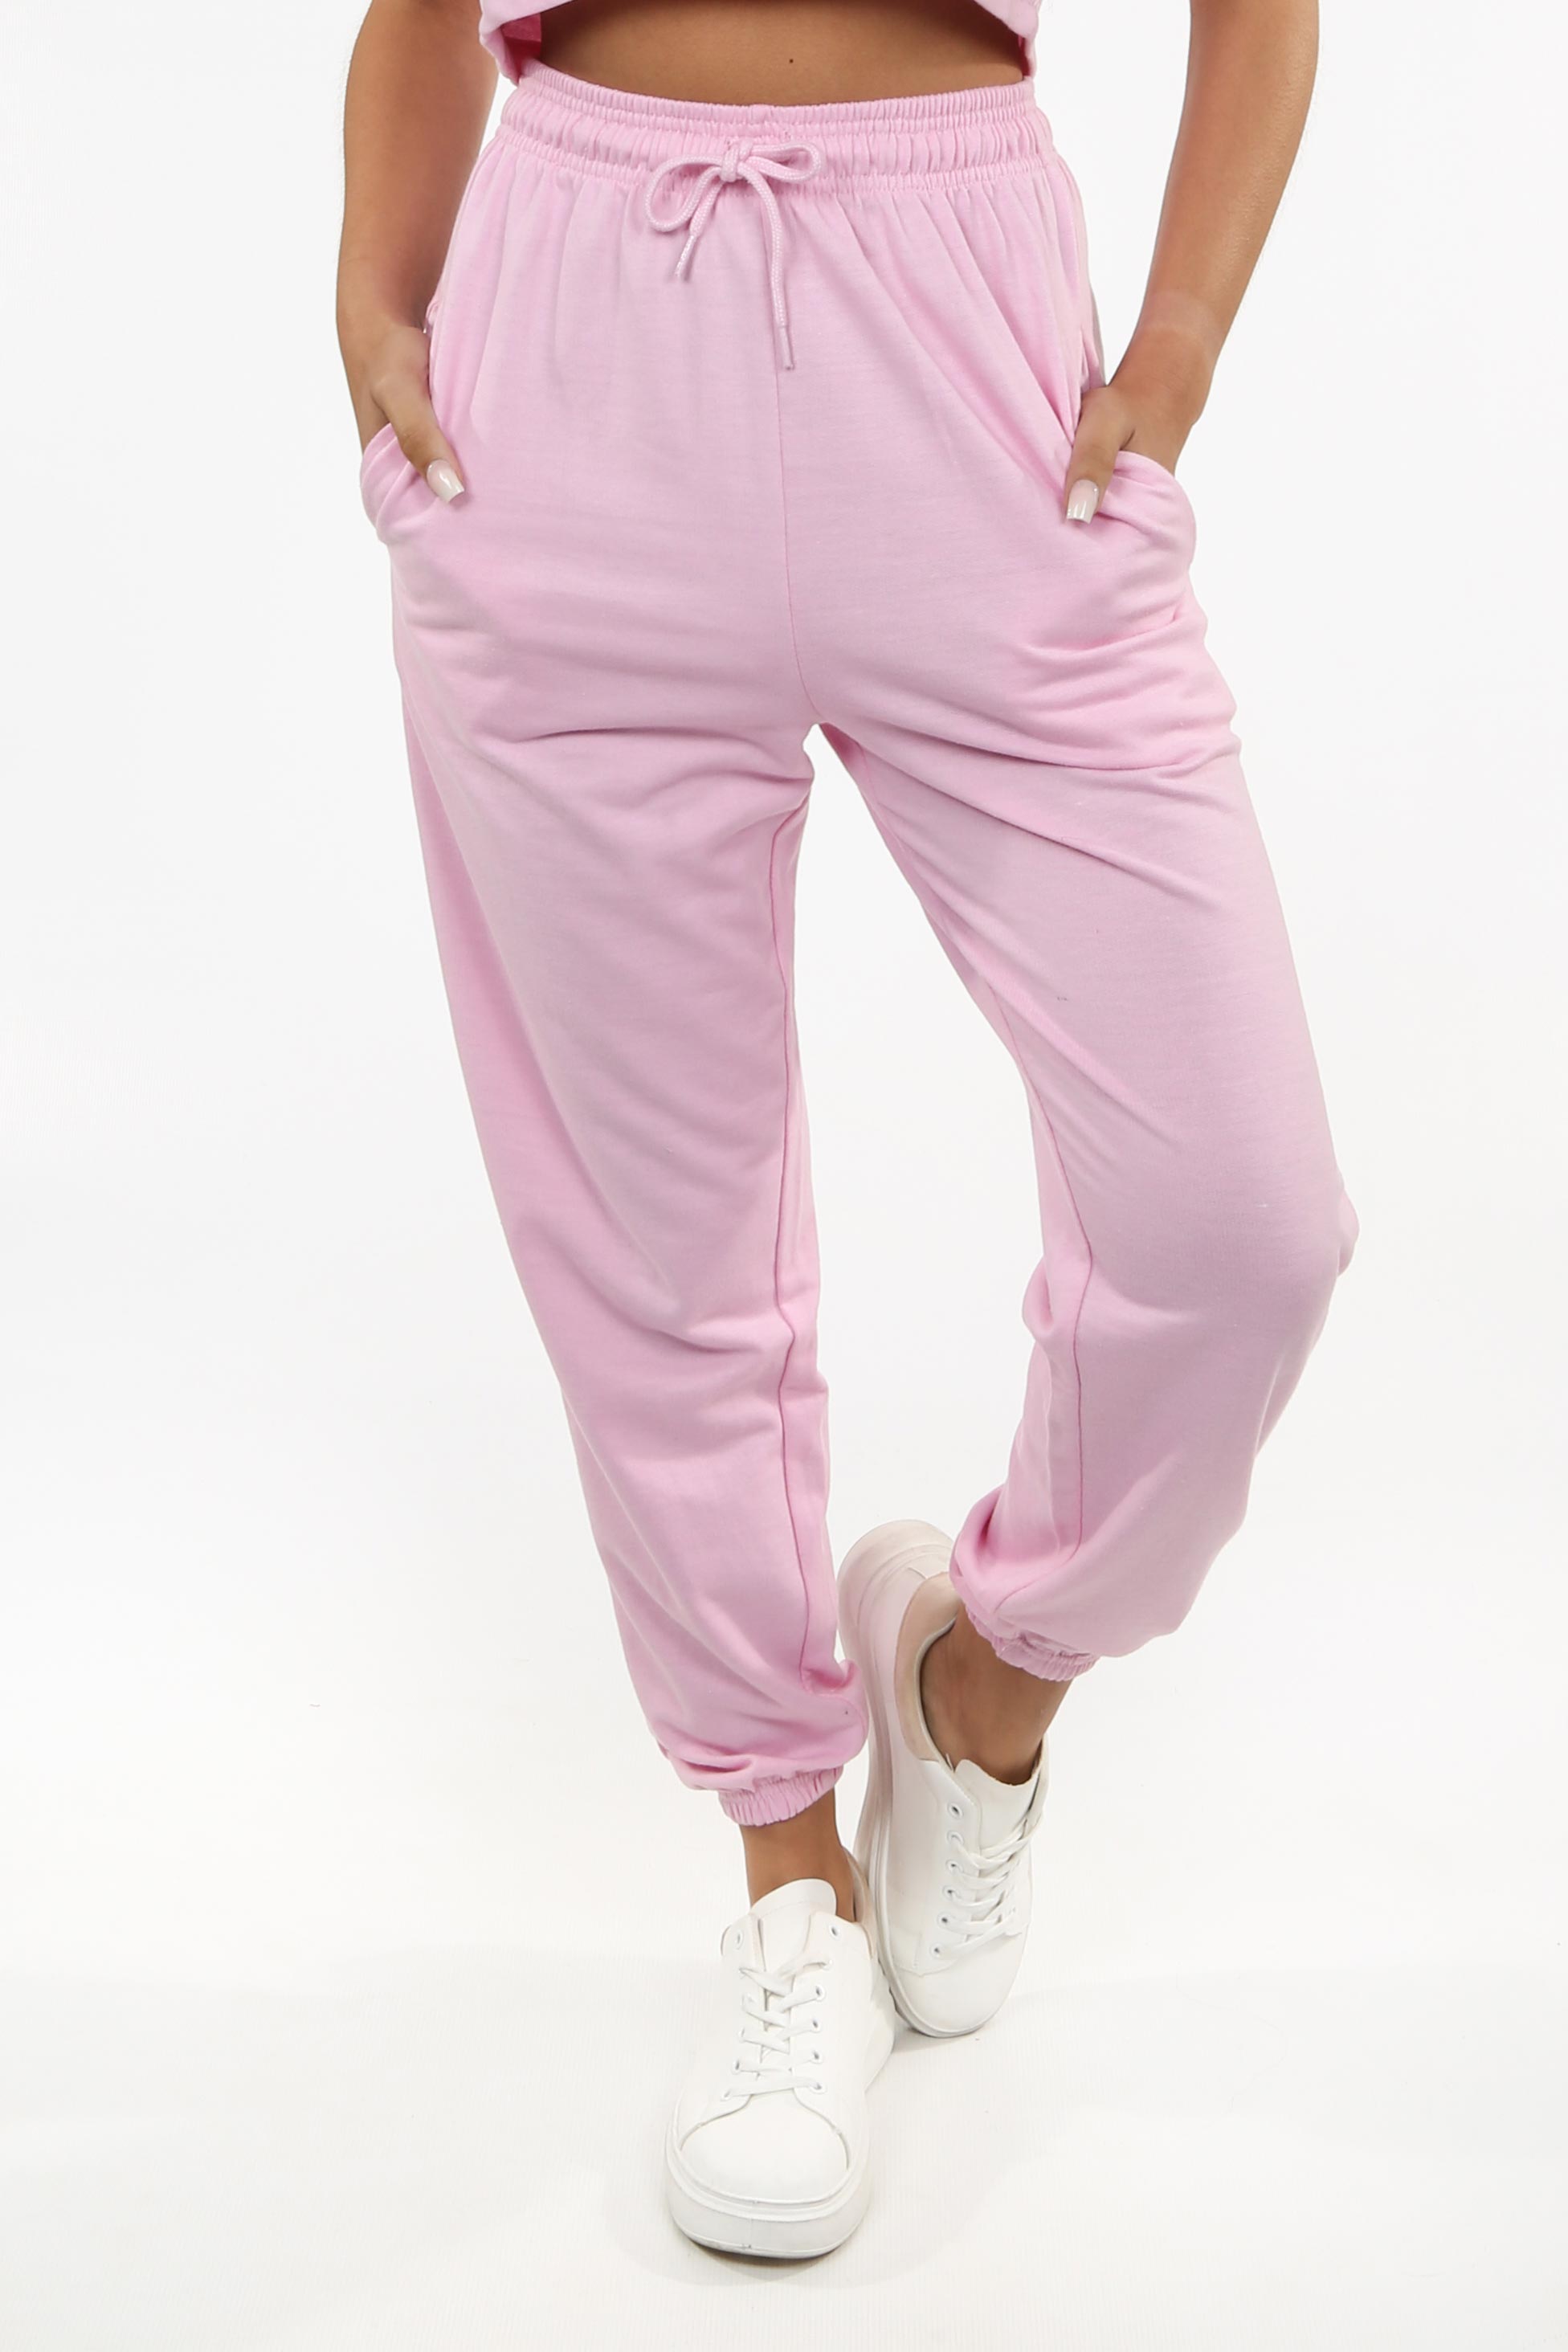 Baby Pink Hooded Loungewear Set